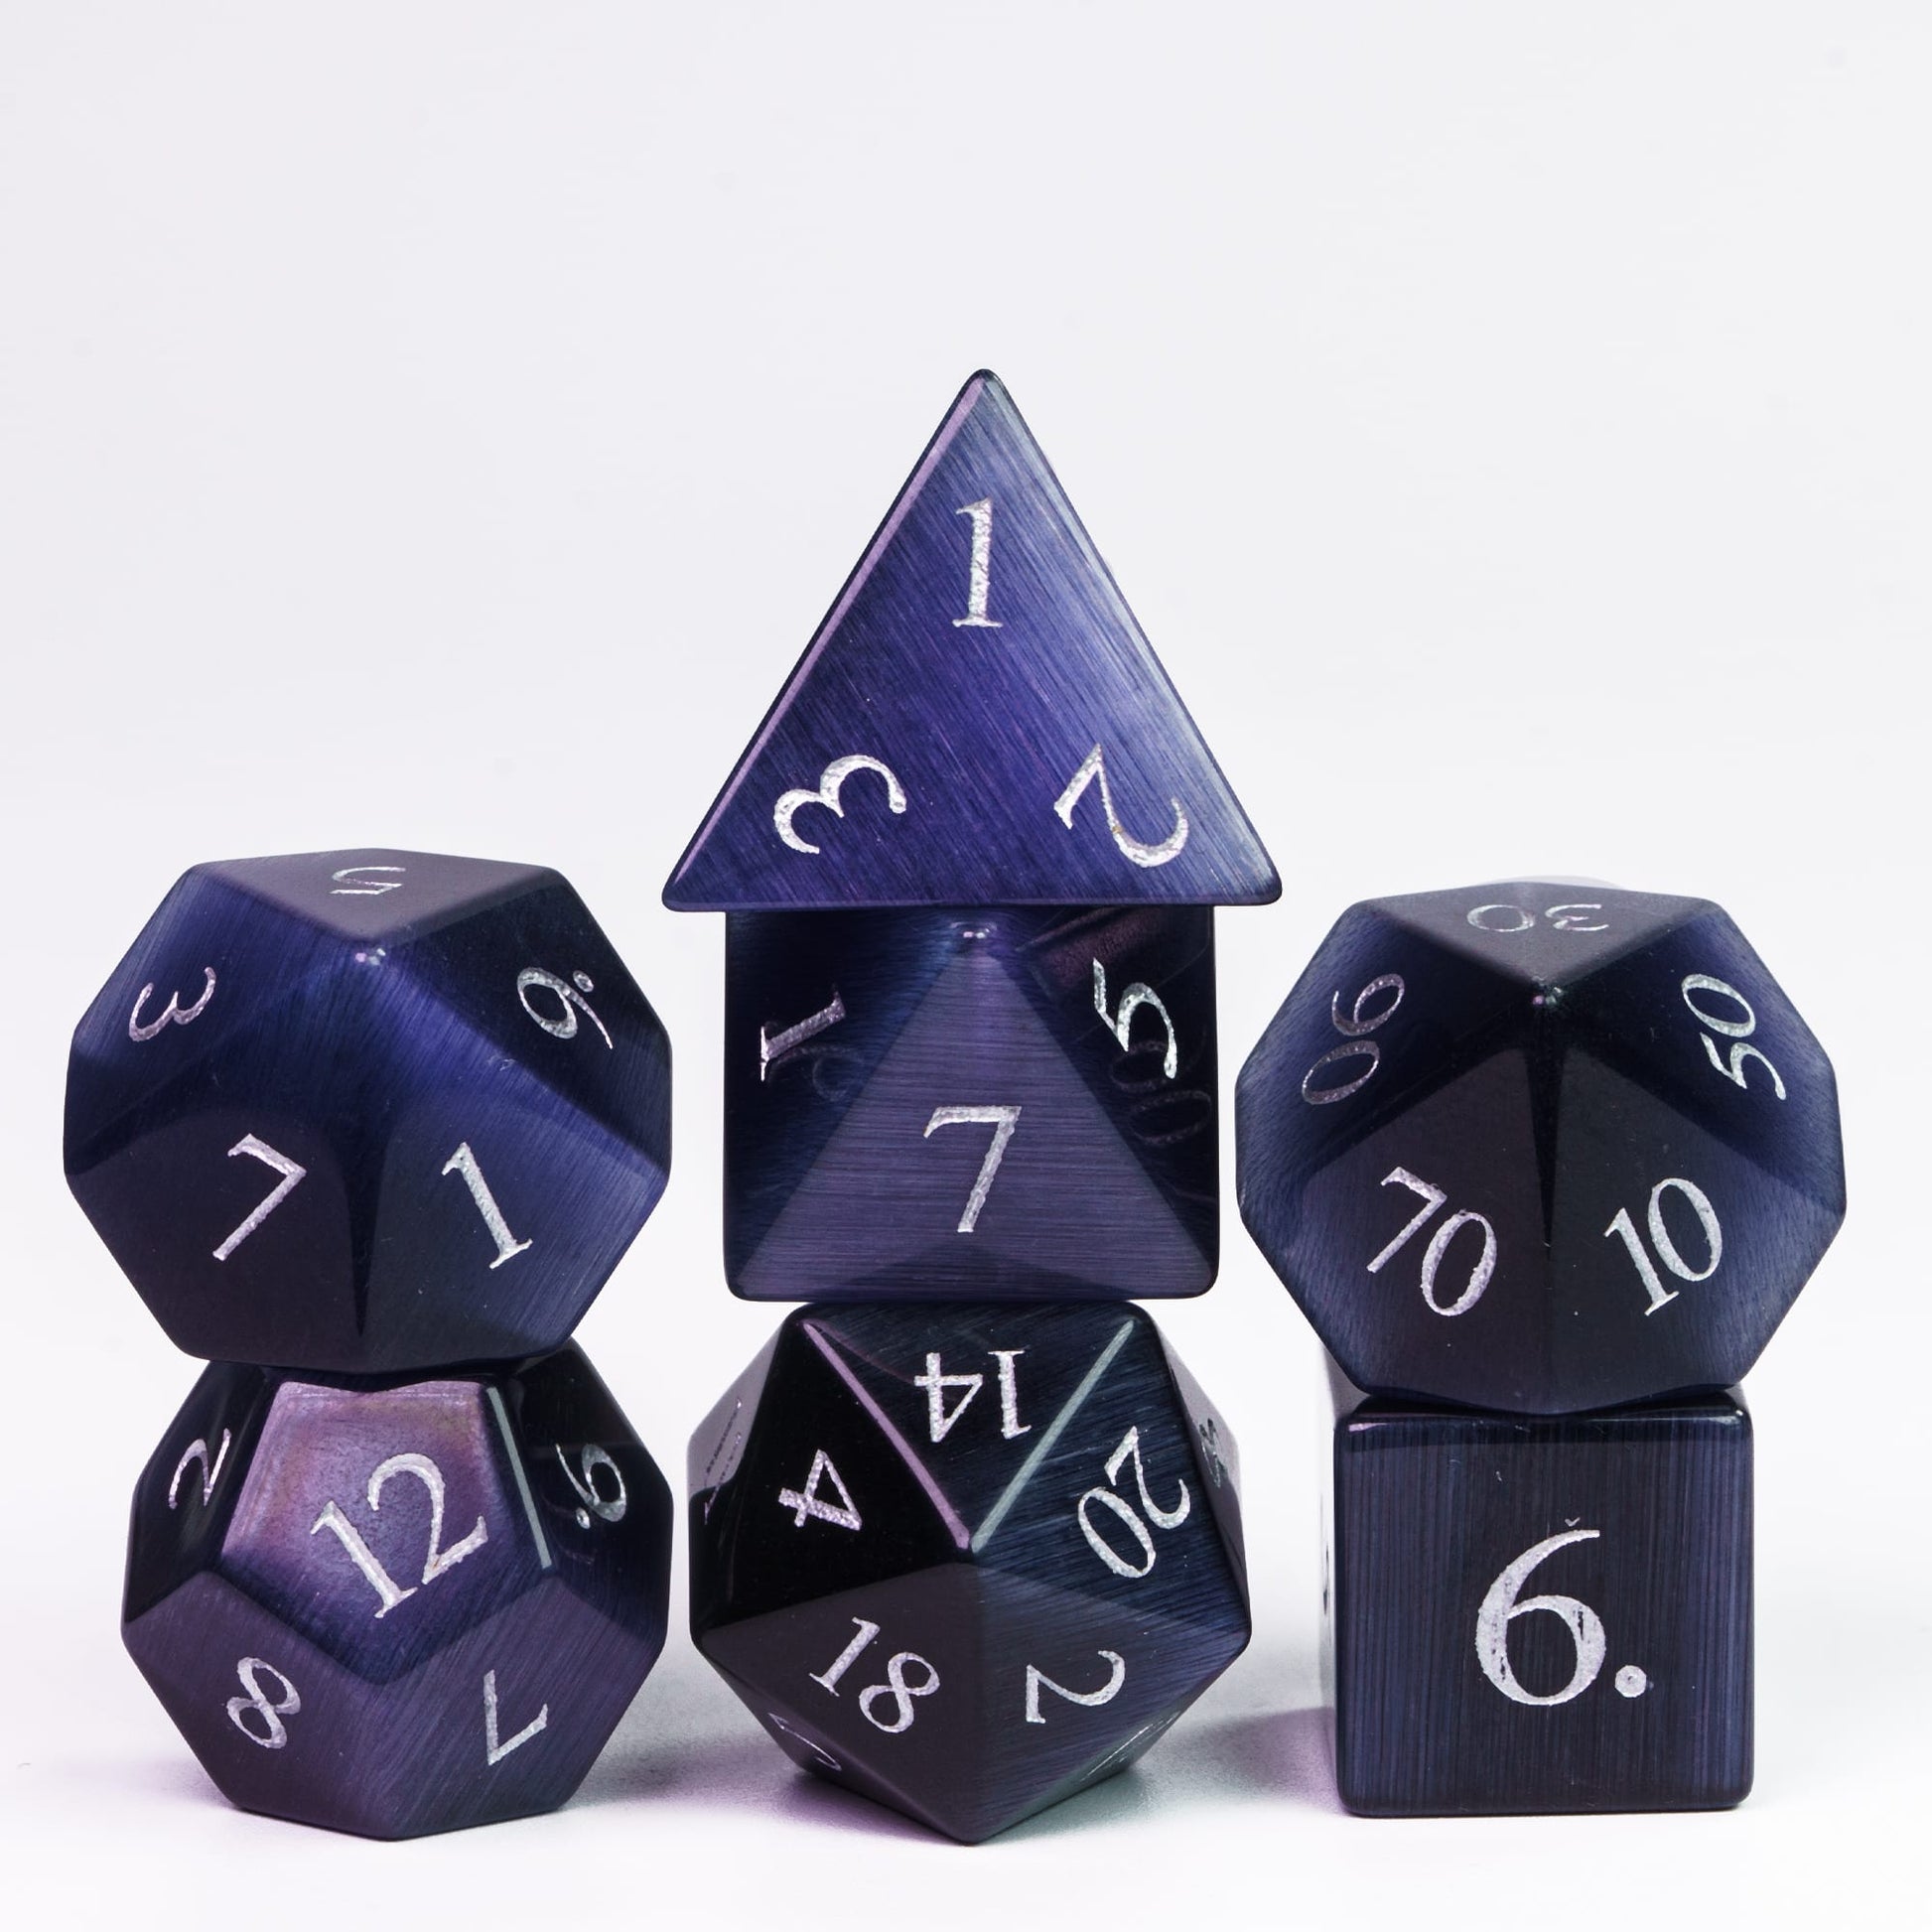 Dark purple stone dice set